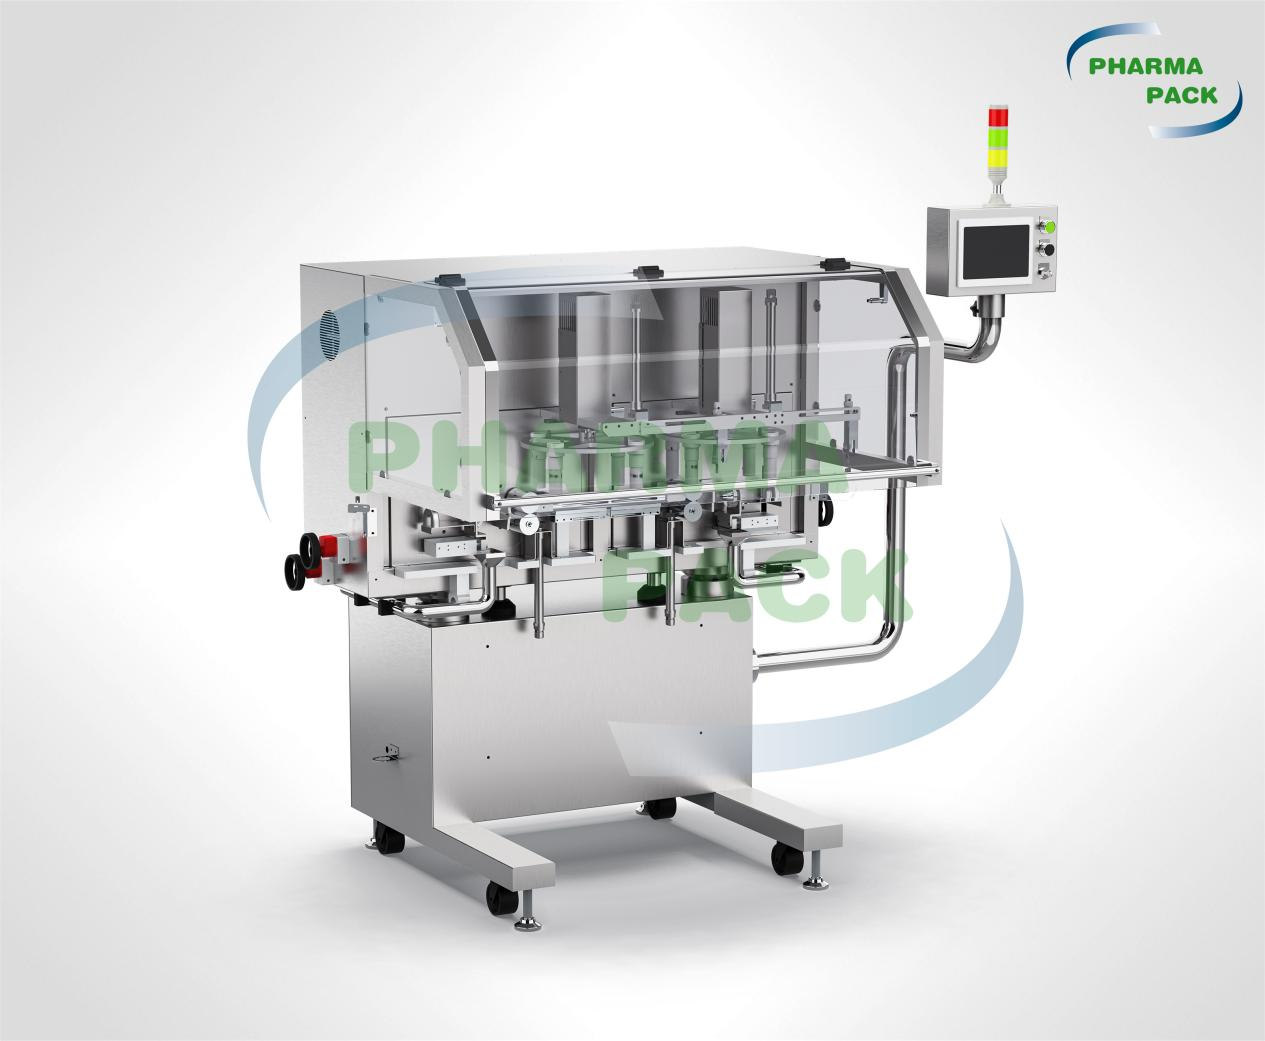 Cotton inserter machine: efficient automation solution